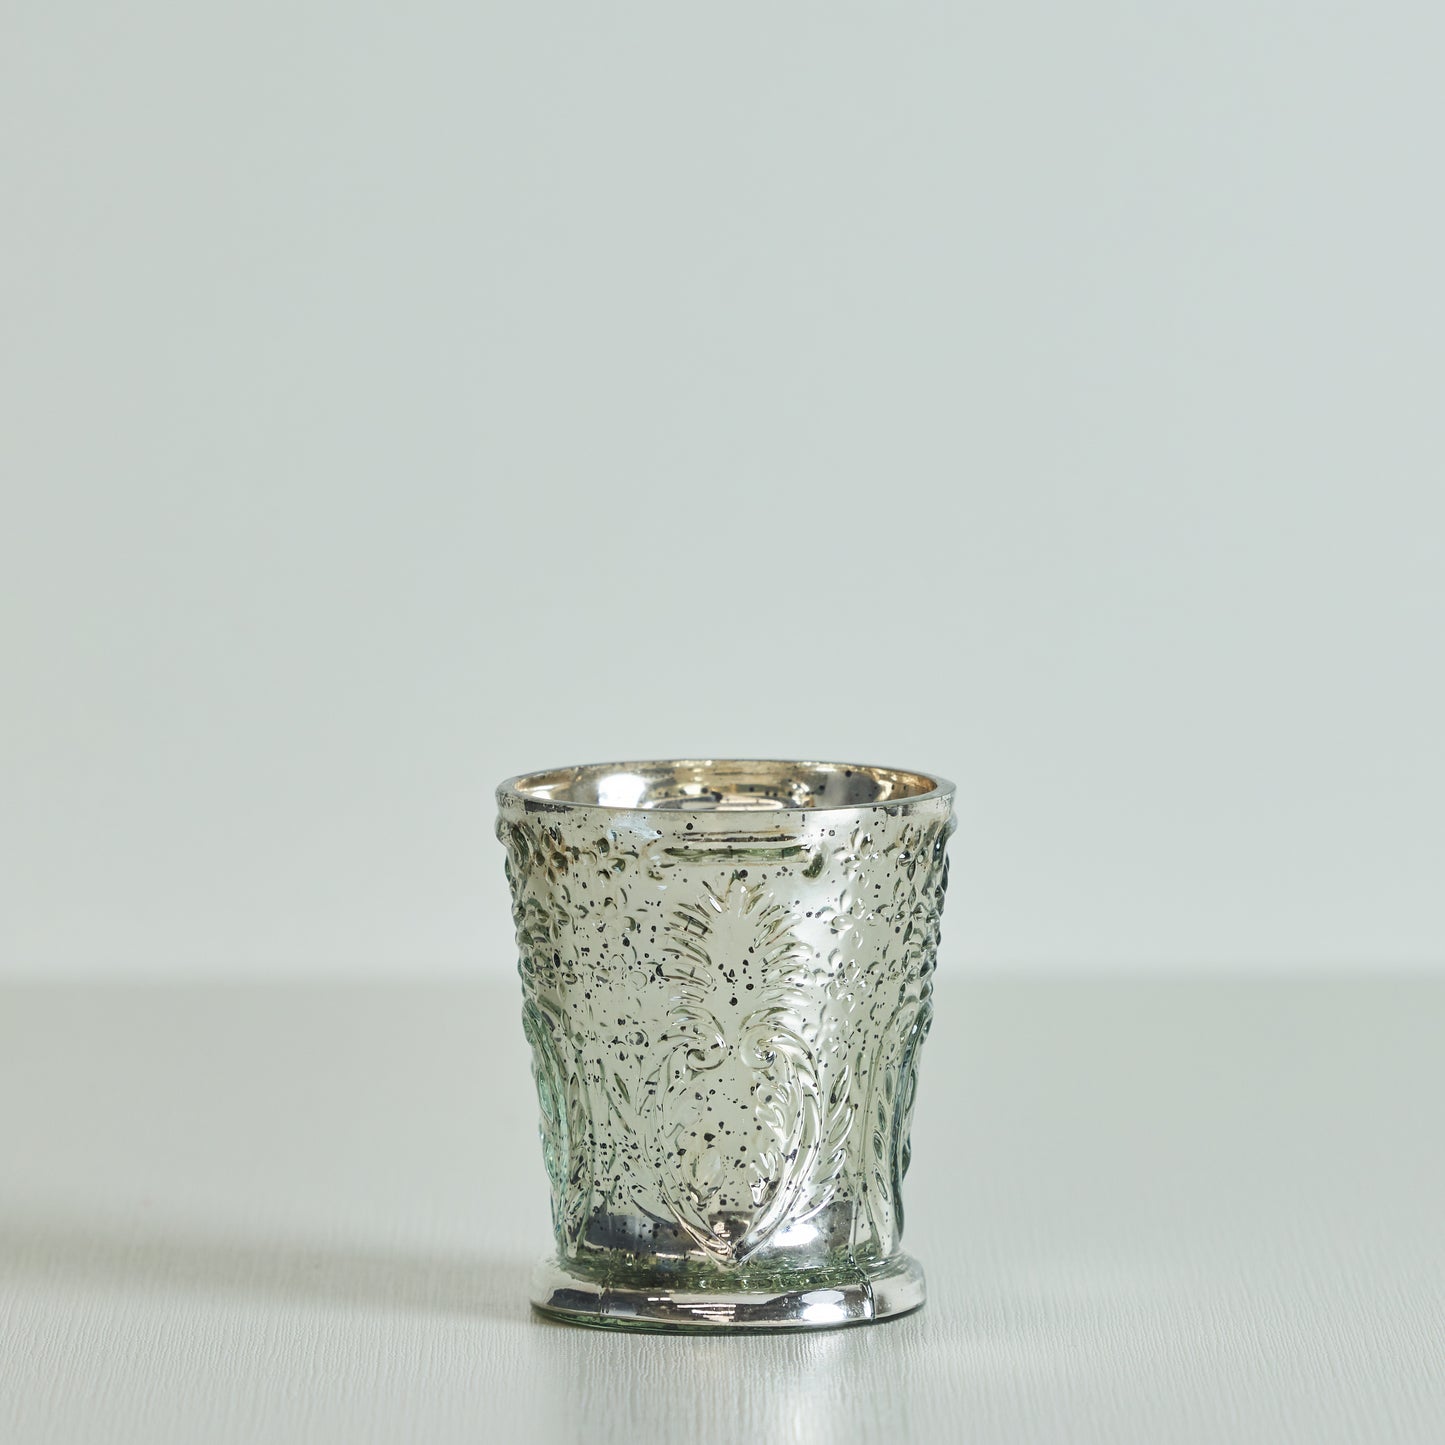 Silver Mercury Glass Votive Holder